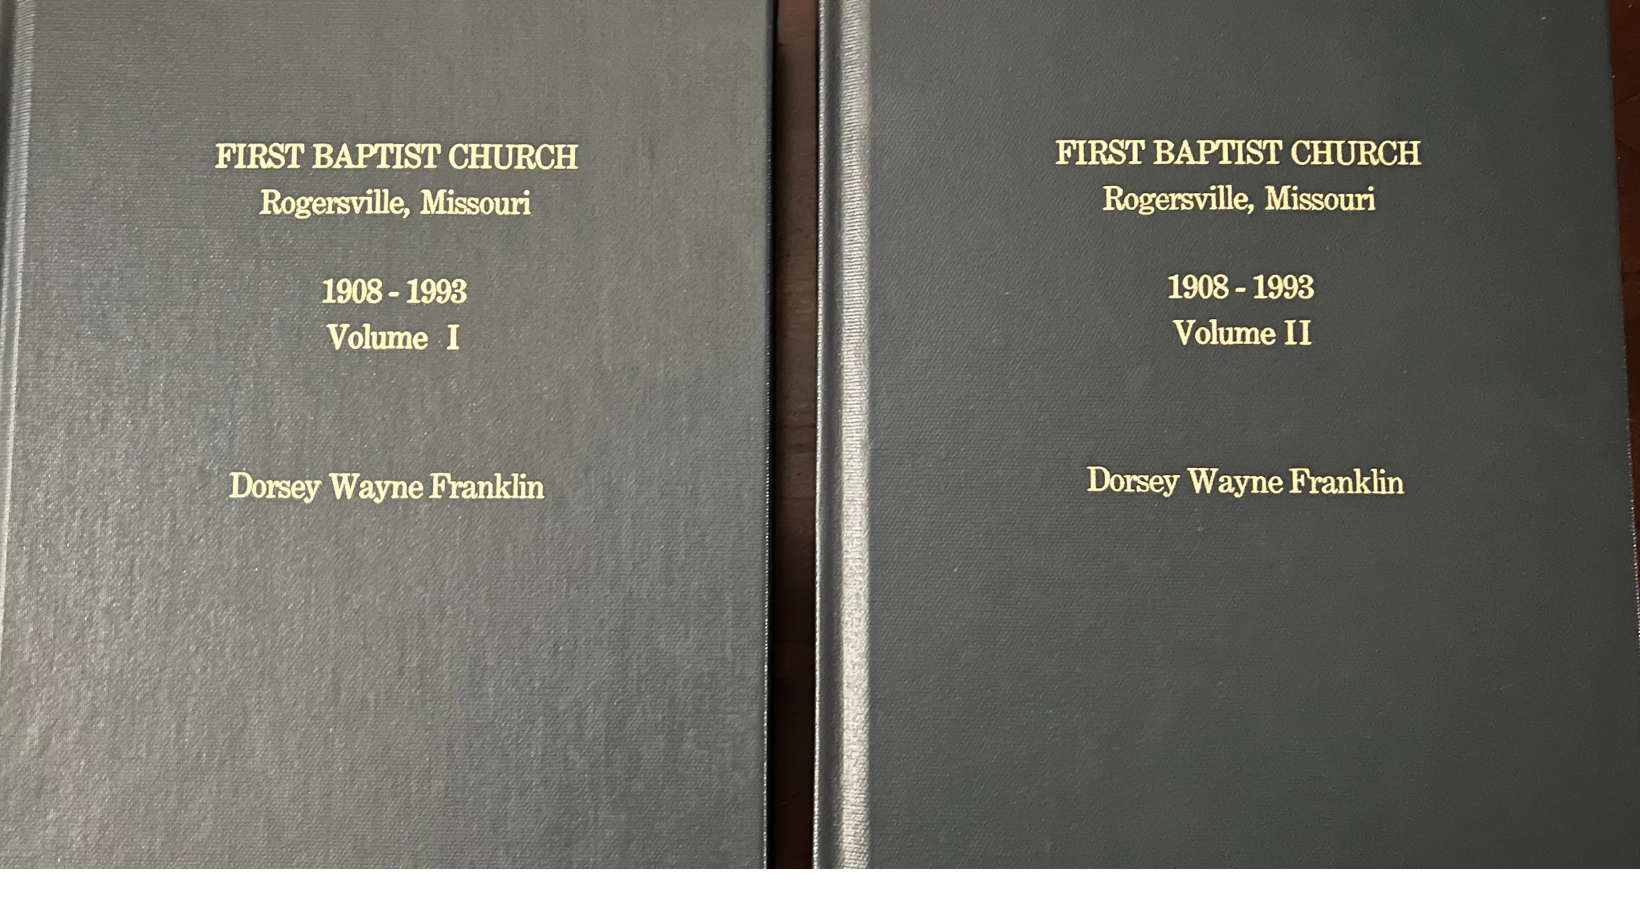 FBC Rogersville History Books by Dorsey Wayne Franklin